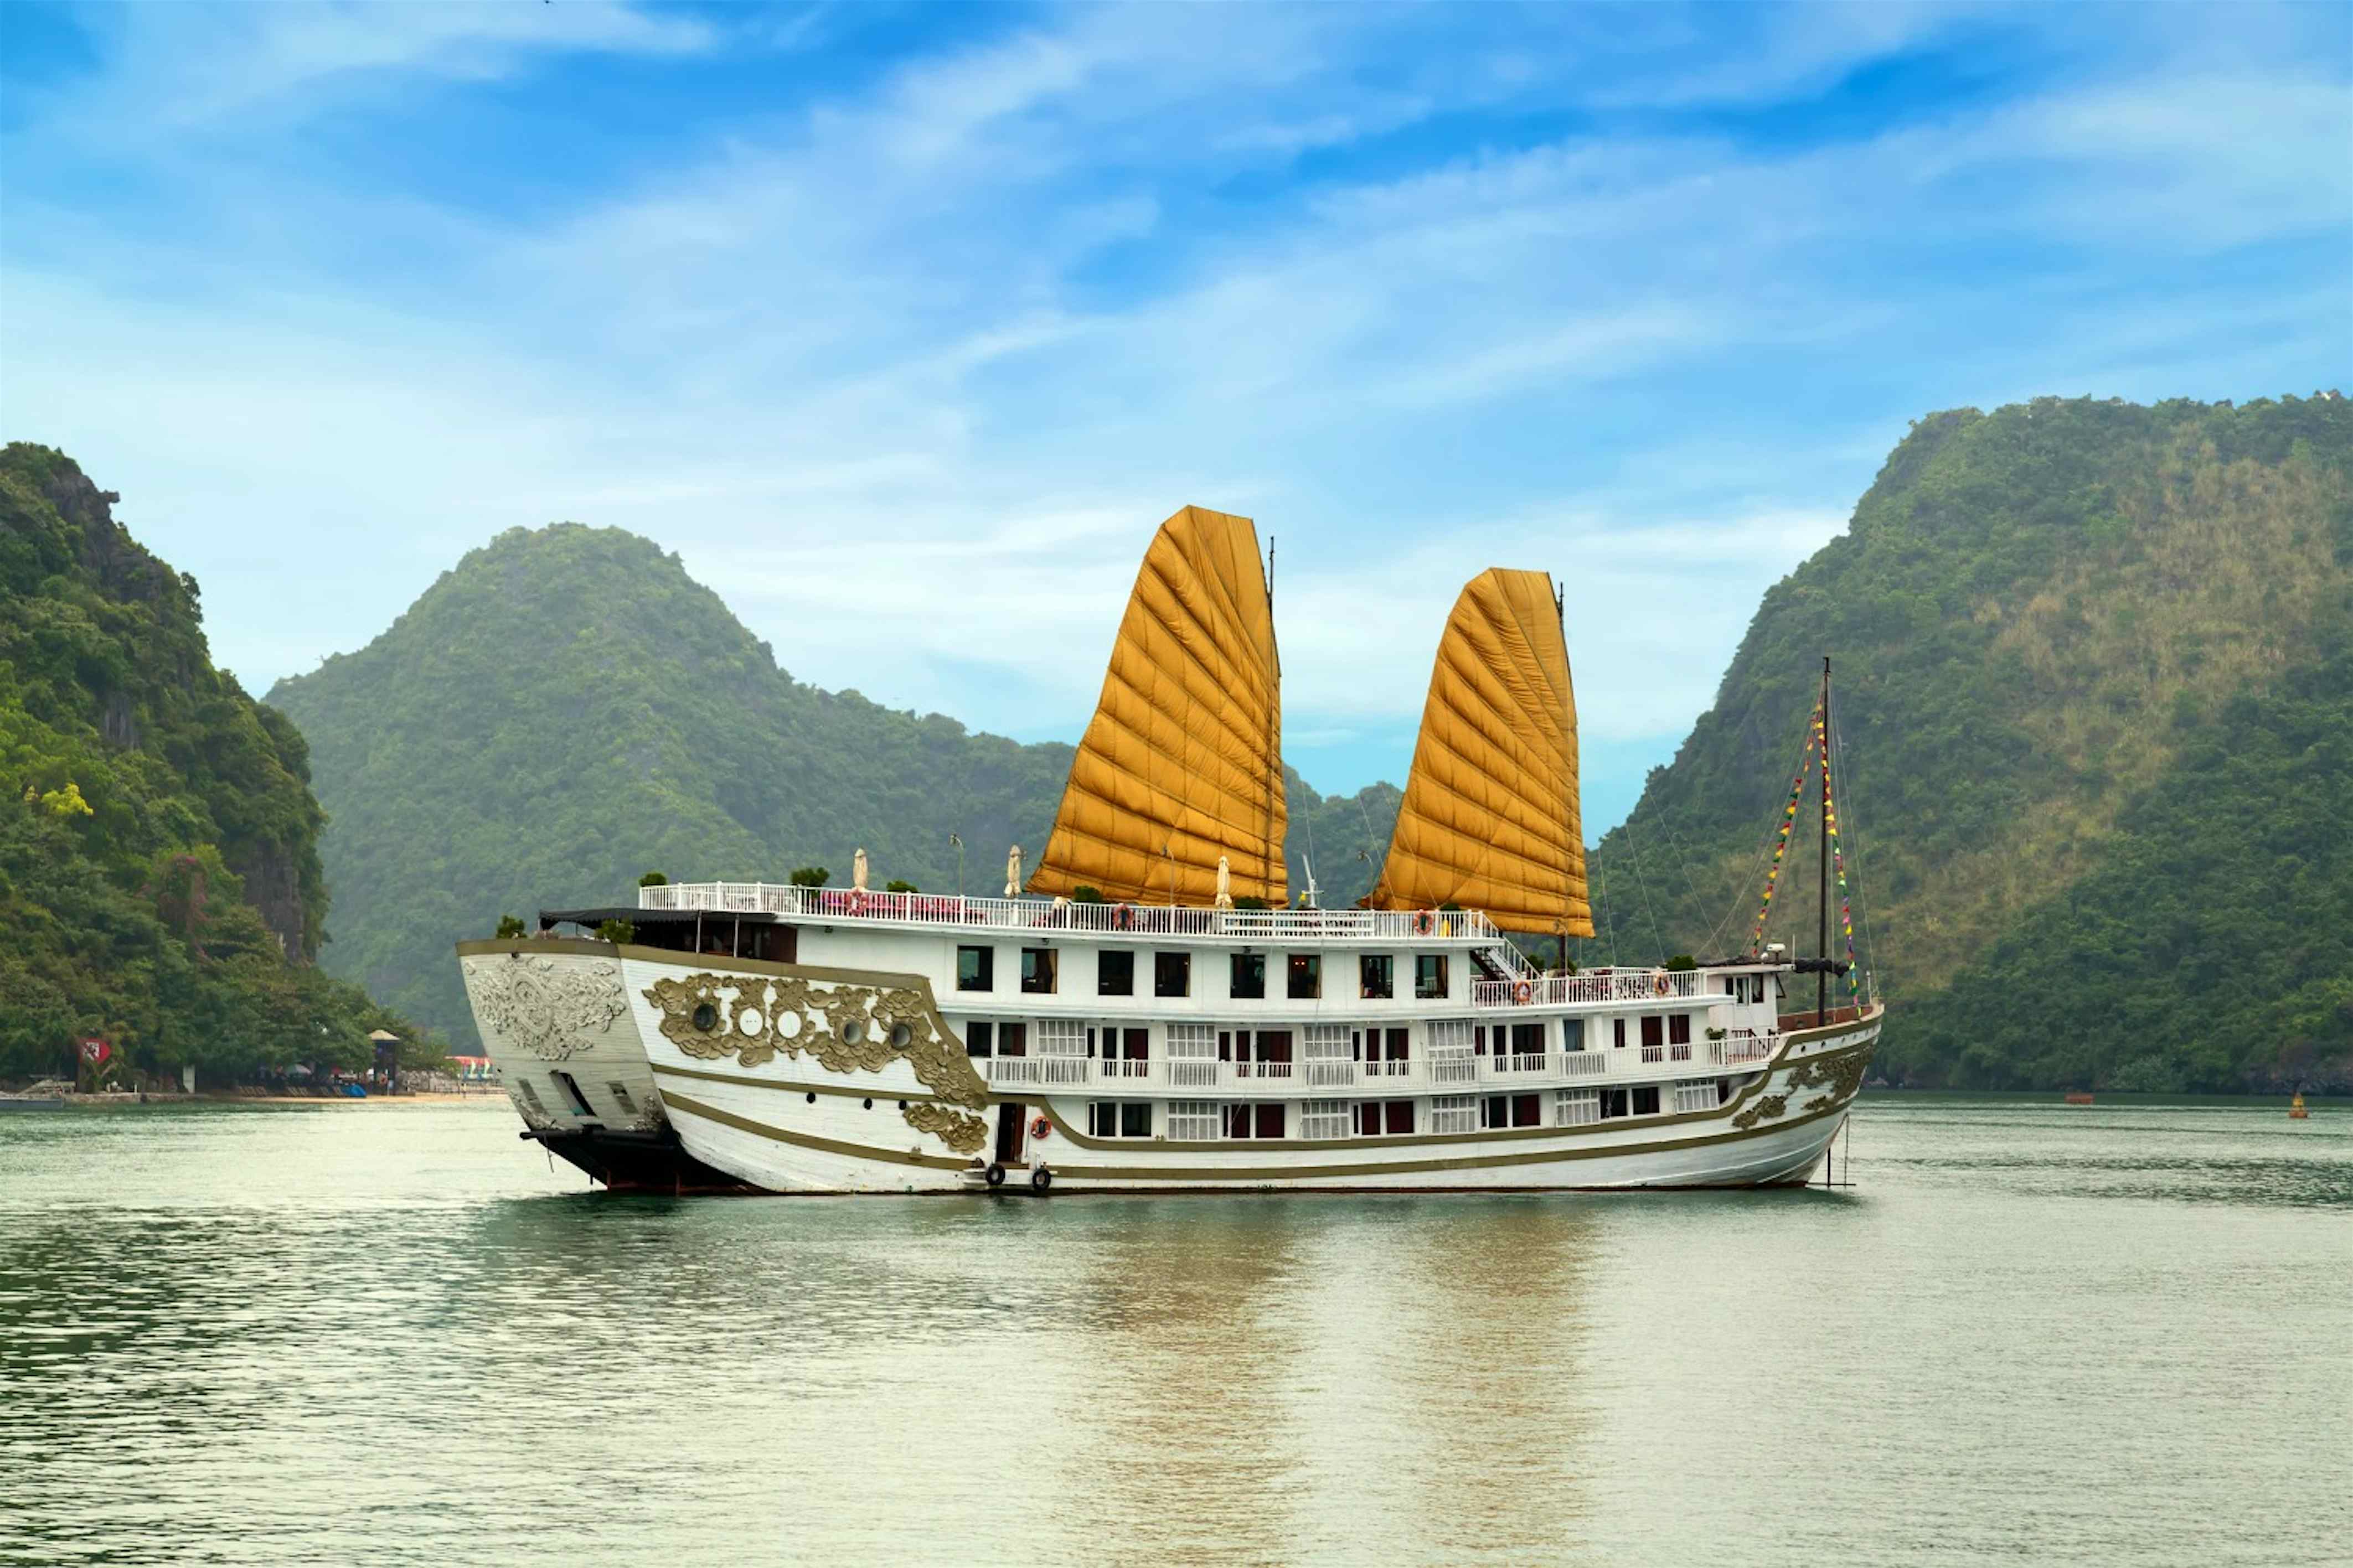 ha long bay cruise in vietnam